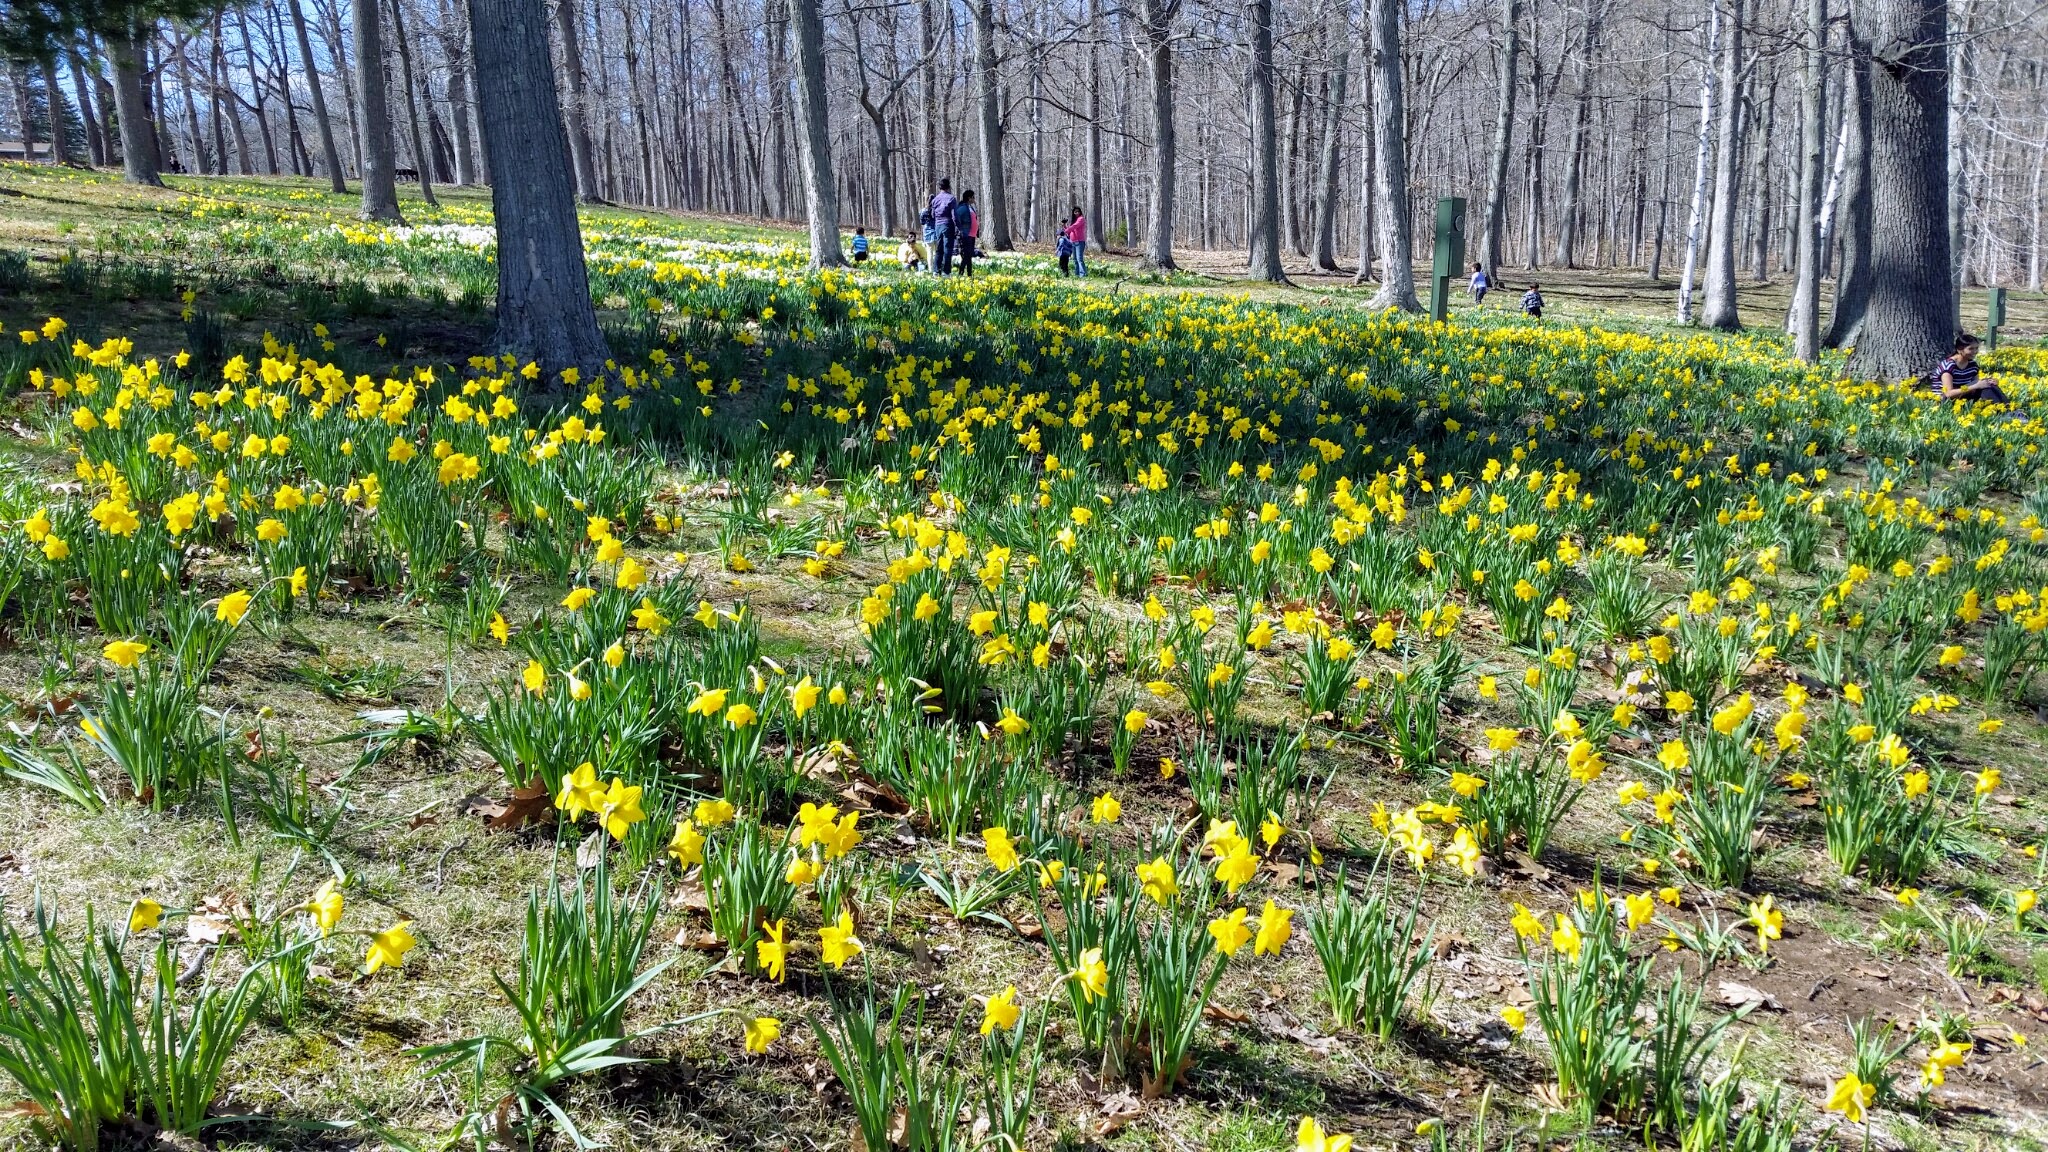 Meriden's Daffodil Festival in Hubbard Park returns